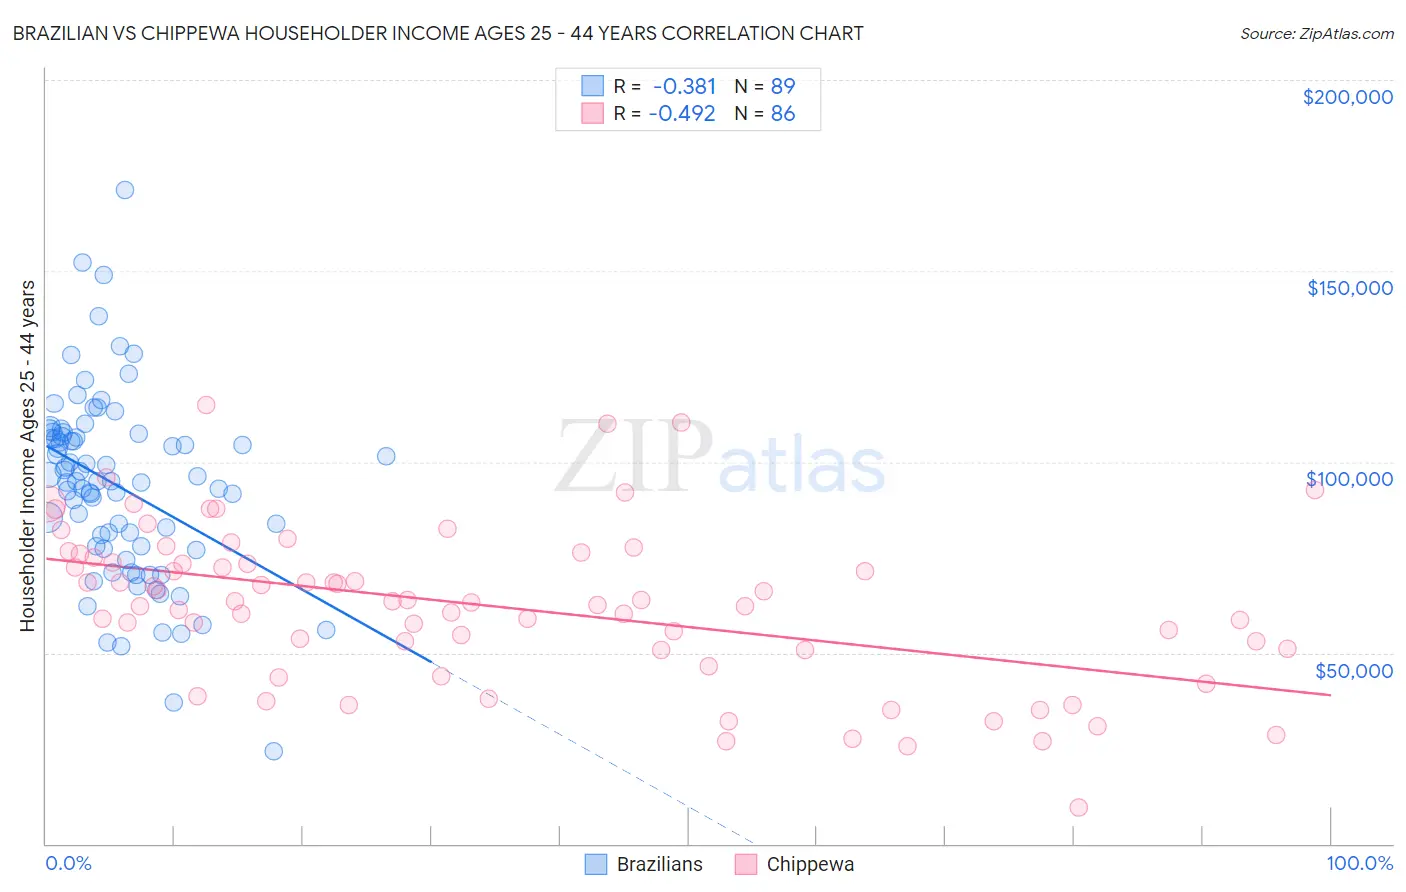 Brazilian vs Chippewa Householder Income Ages 25 - 44 years